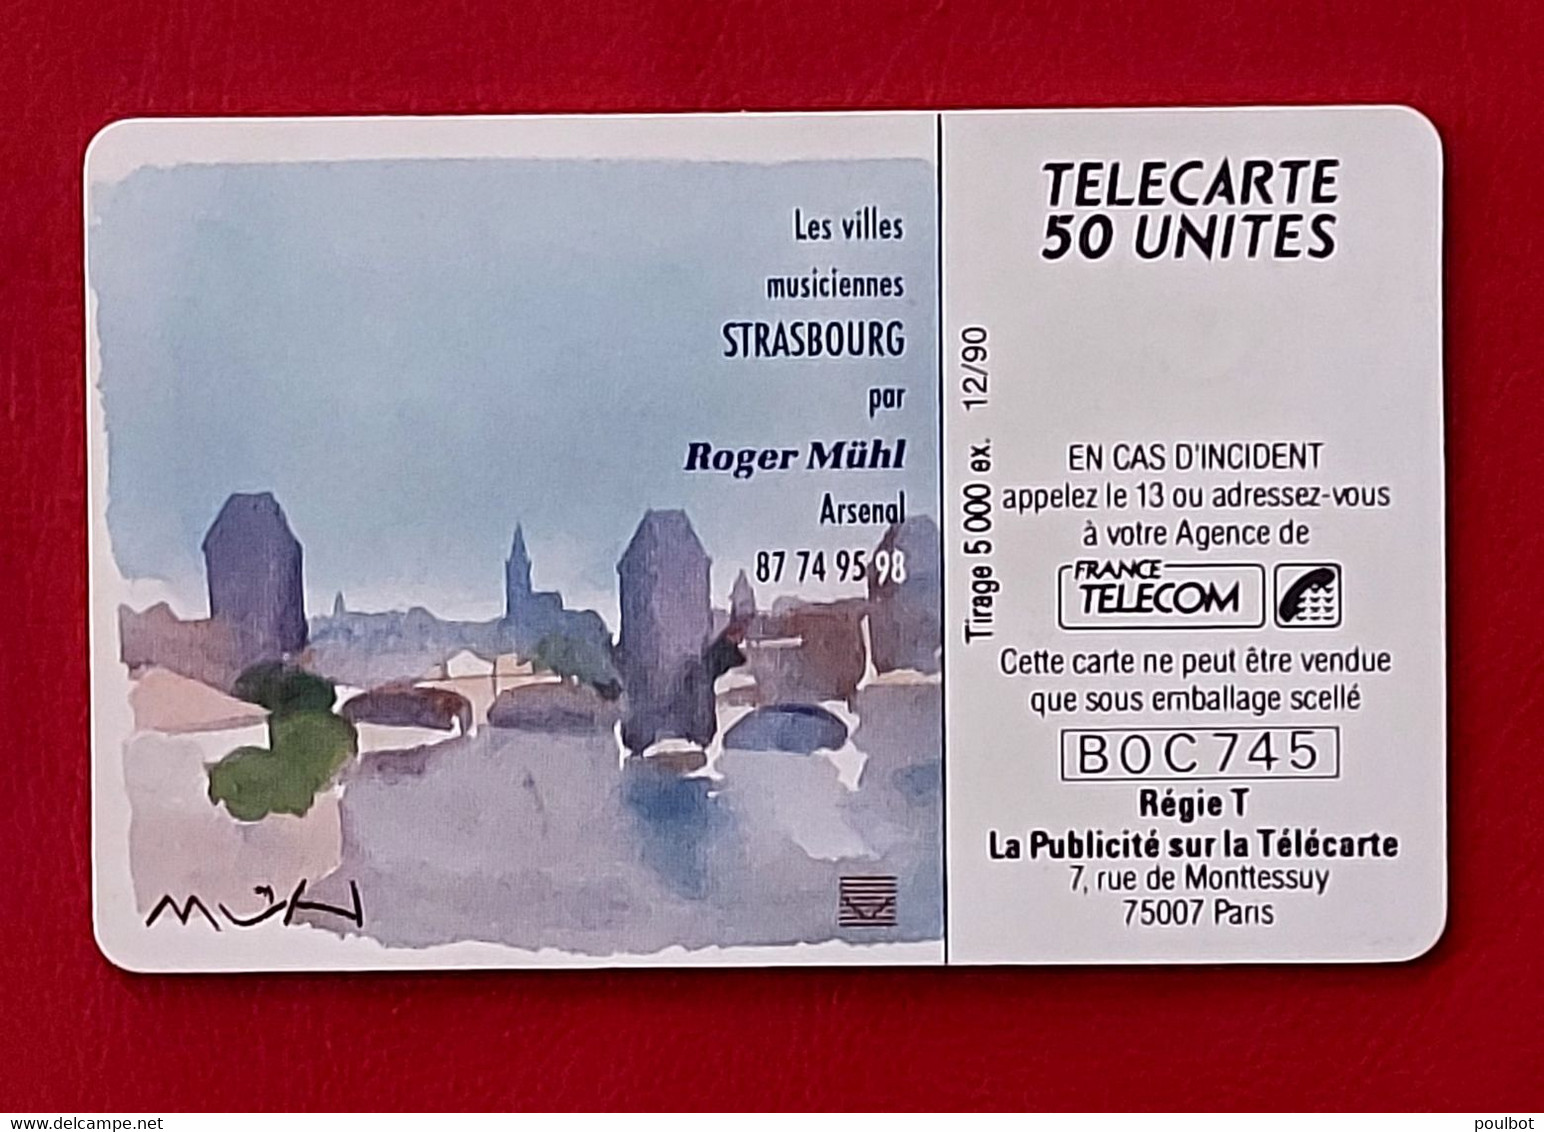 Télécarte F 139 Strasbourg Ville Musicienne - 1990